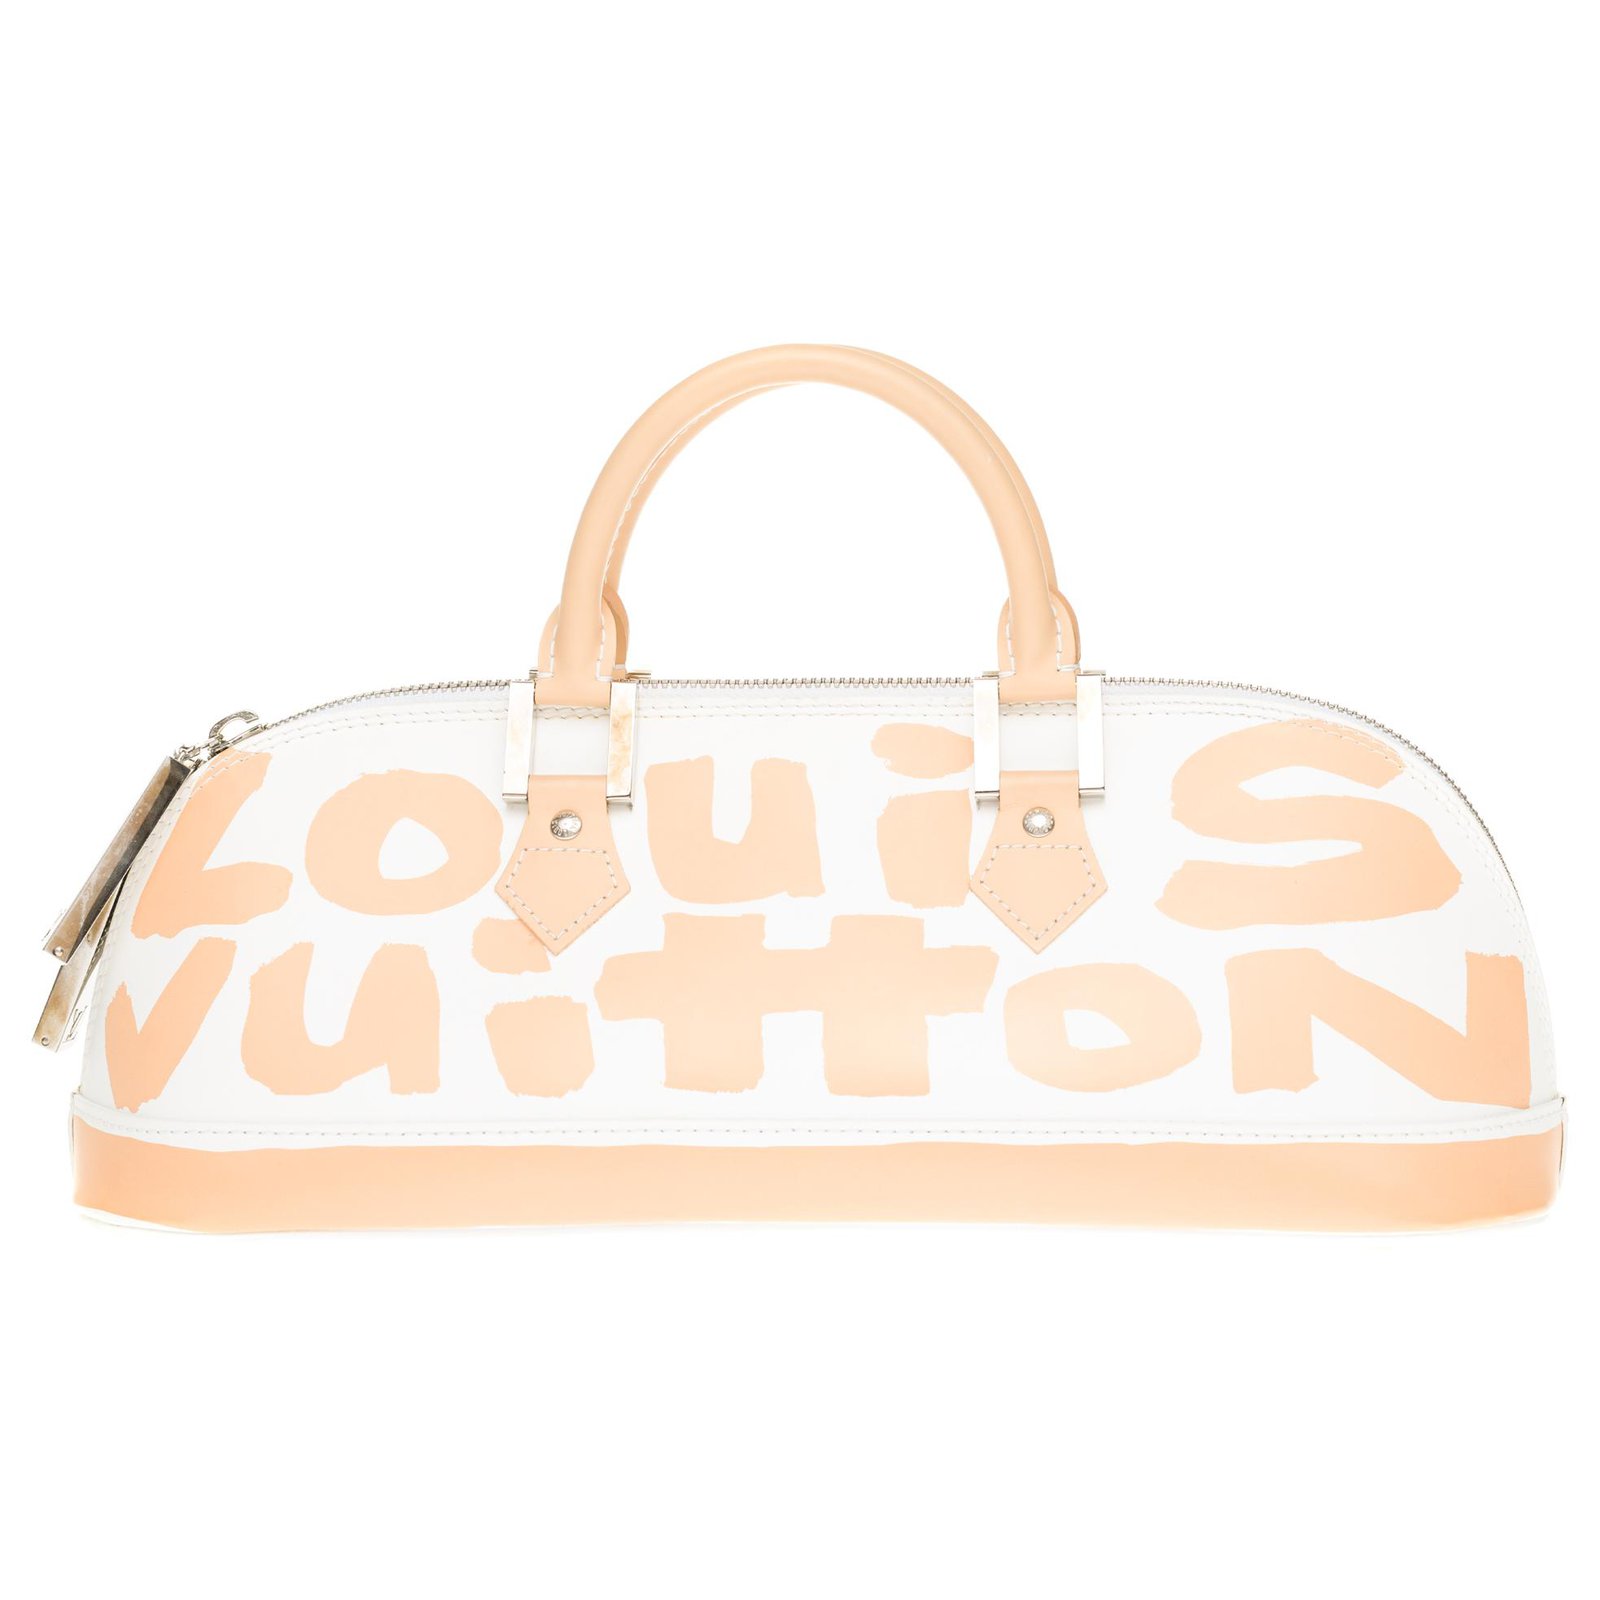 Louis Vuitton Stephen Sprouse Alma PM Graffiti Bag – THE M VNTG